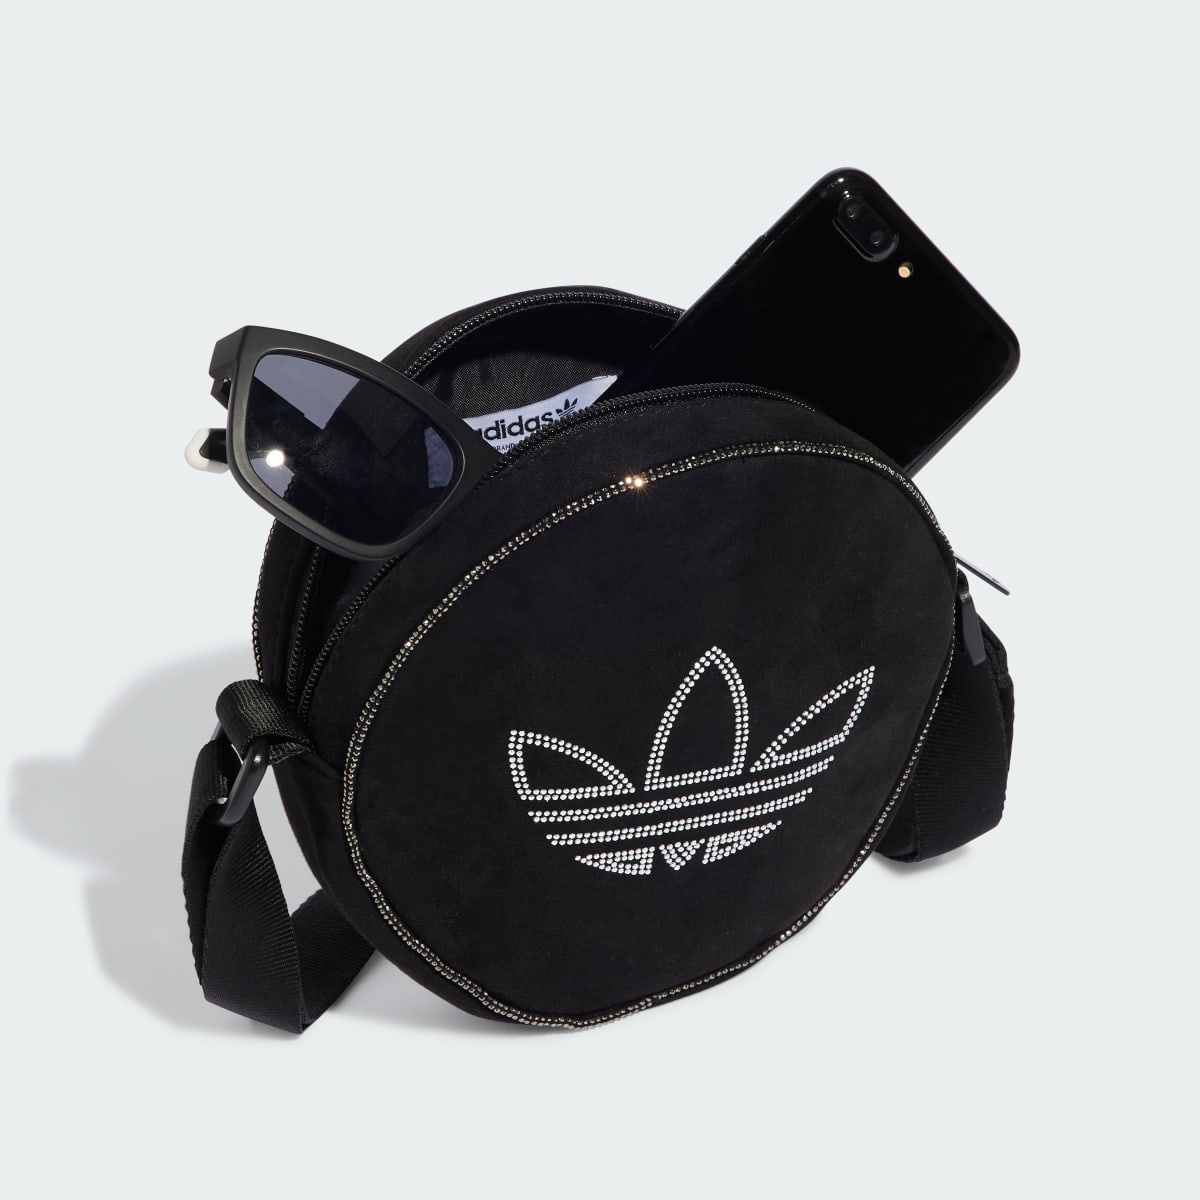 Adidas Rhinestones Fake Suede Round Bag. 5